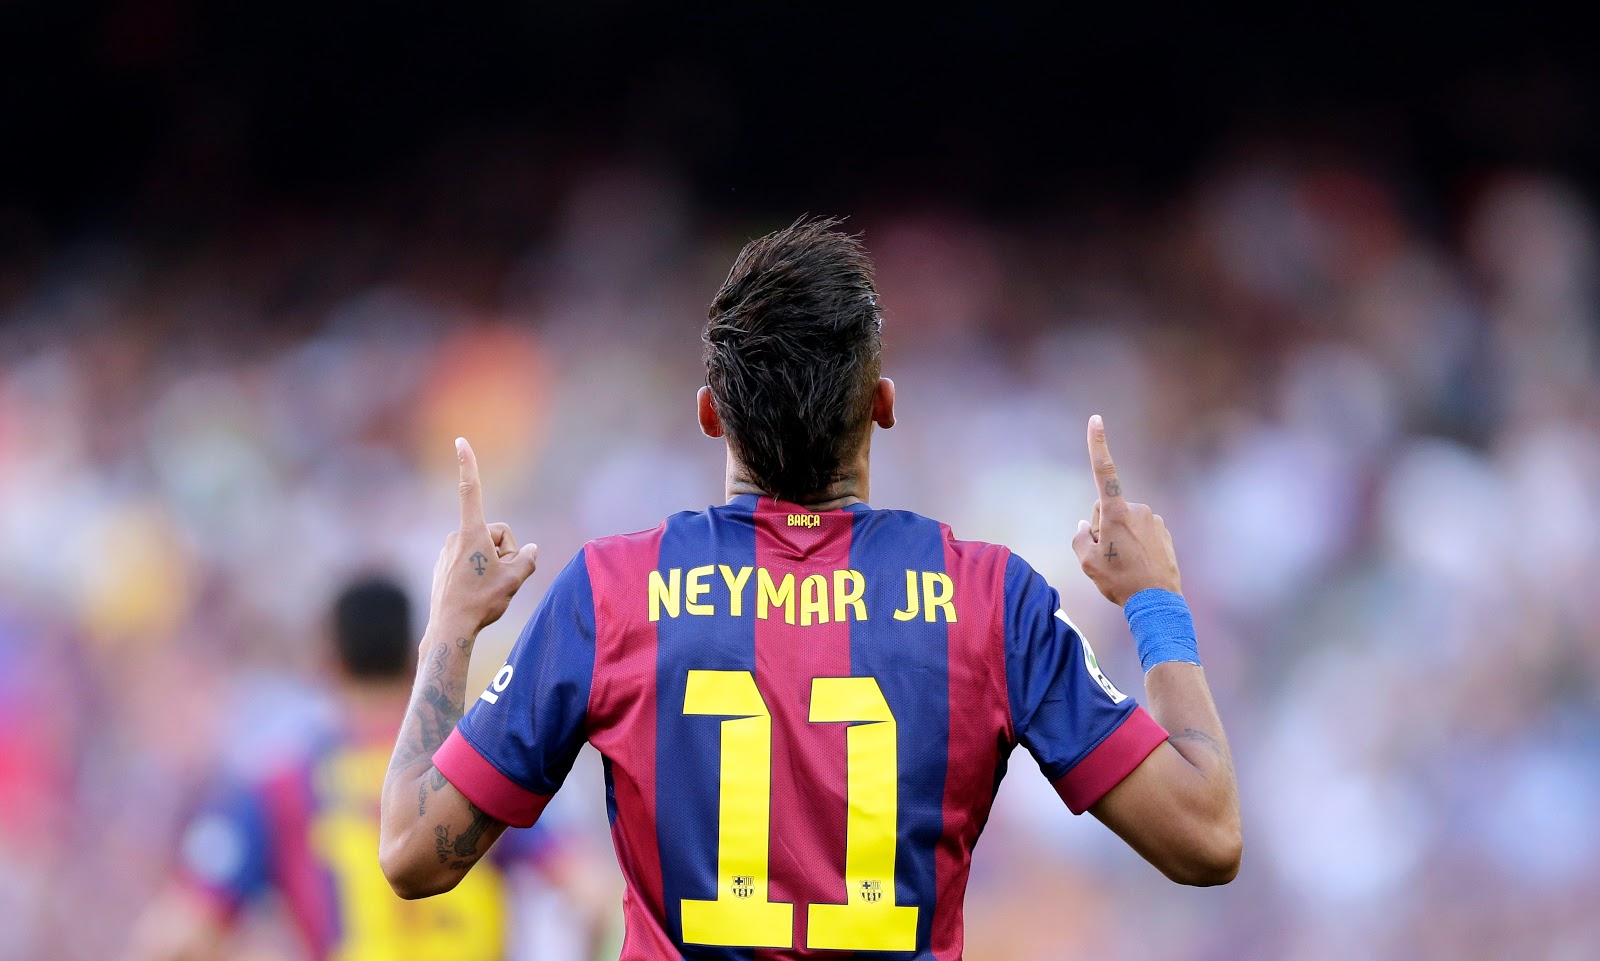 Neymar Jr Football Soccer Player Free Hd Raising Hands Up Mobile Desktop Bakground Download Pics